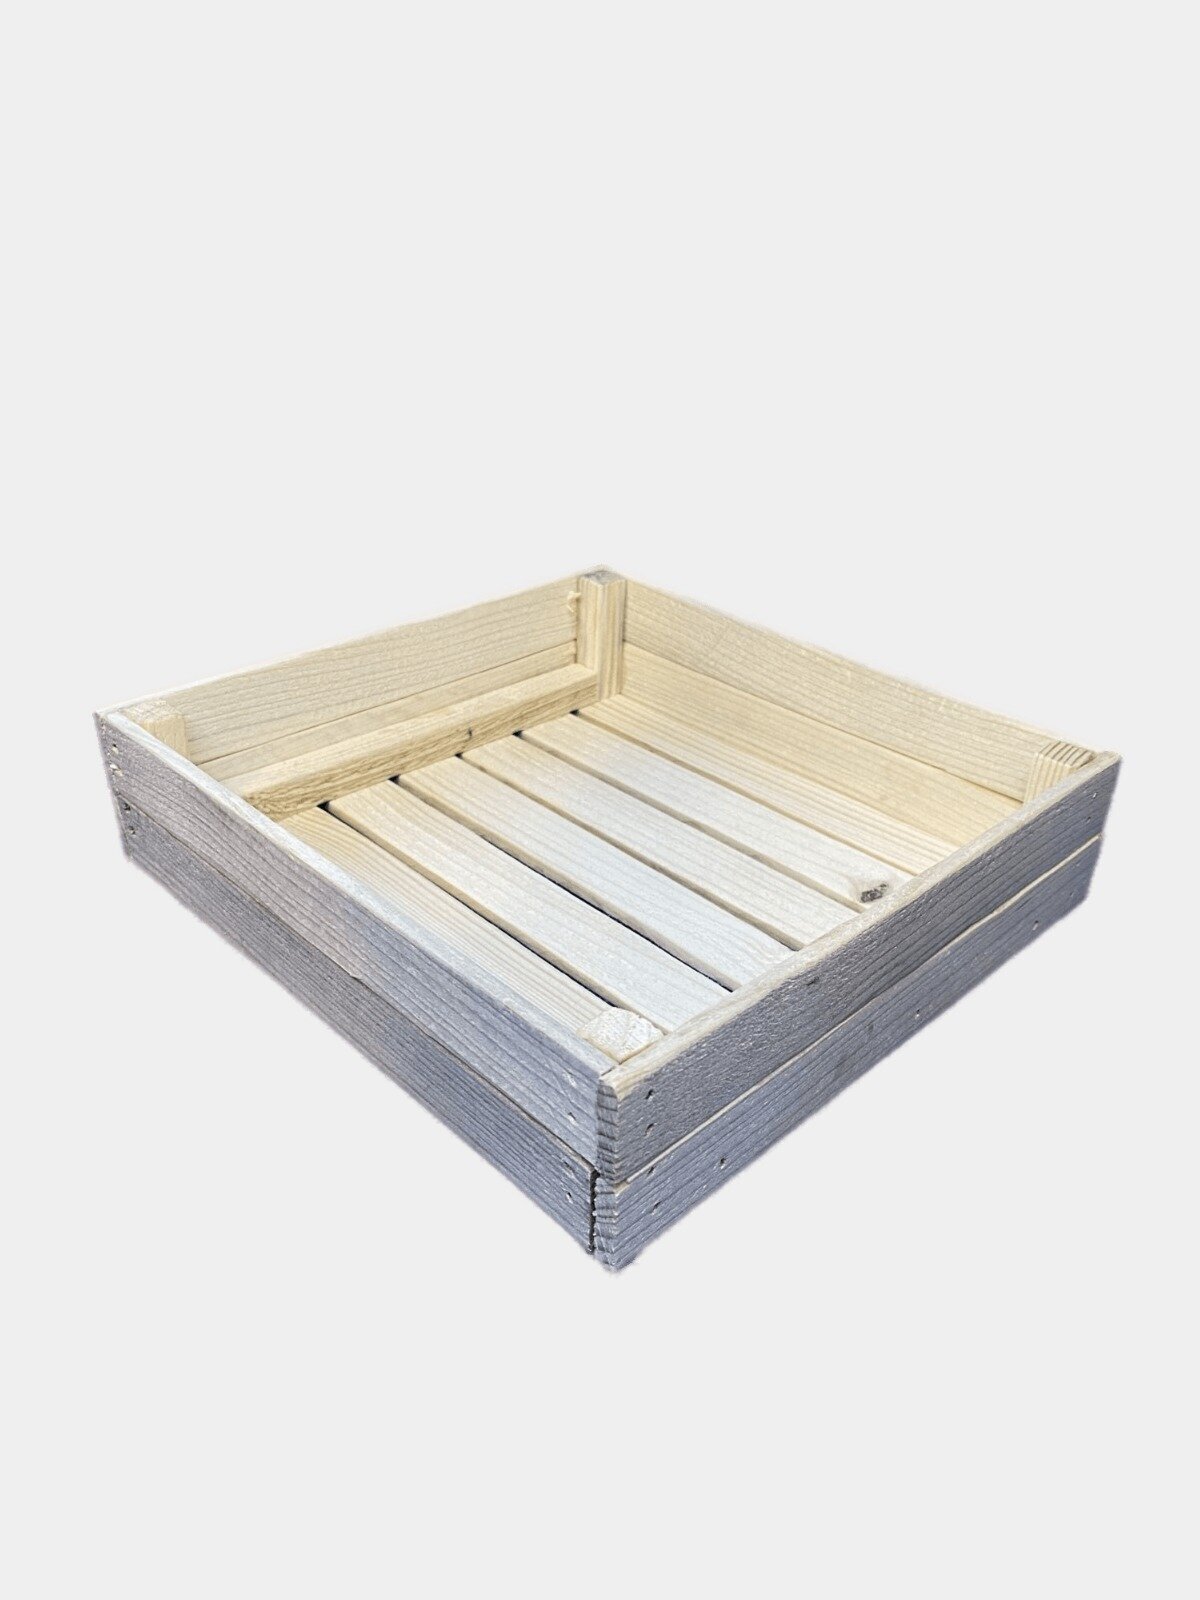 Ящик для хранения, подарочная коробка, декоративная коробка для хранения, деревянный ящик 20,5х19,5х5 см